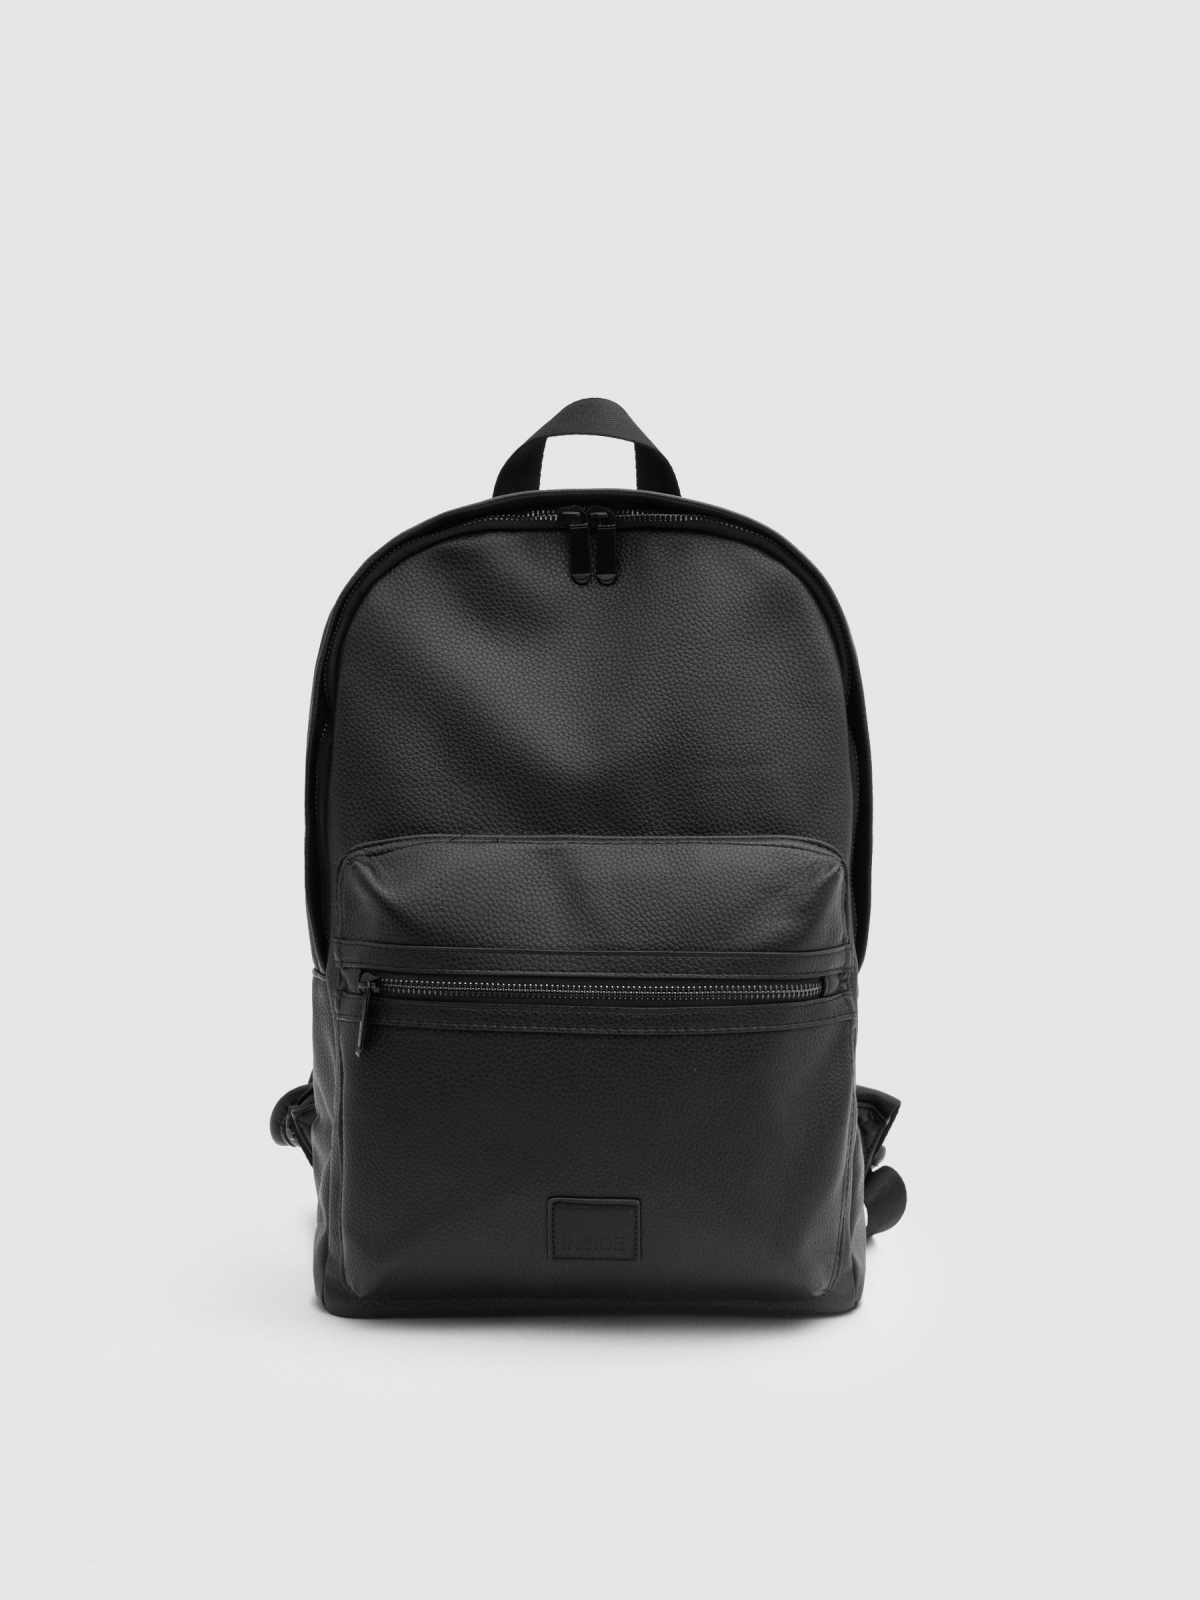 Basic black backpack